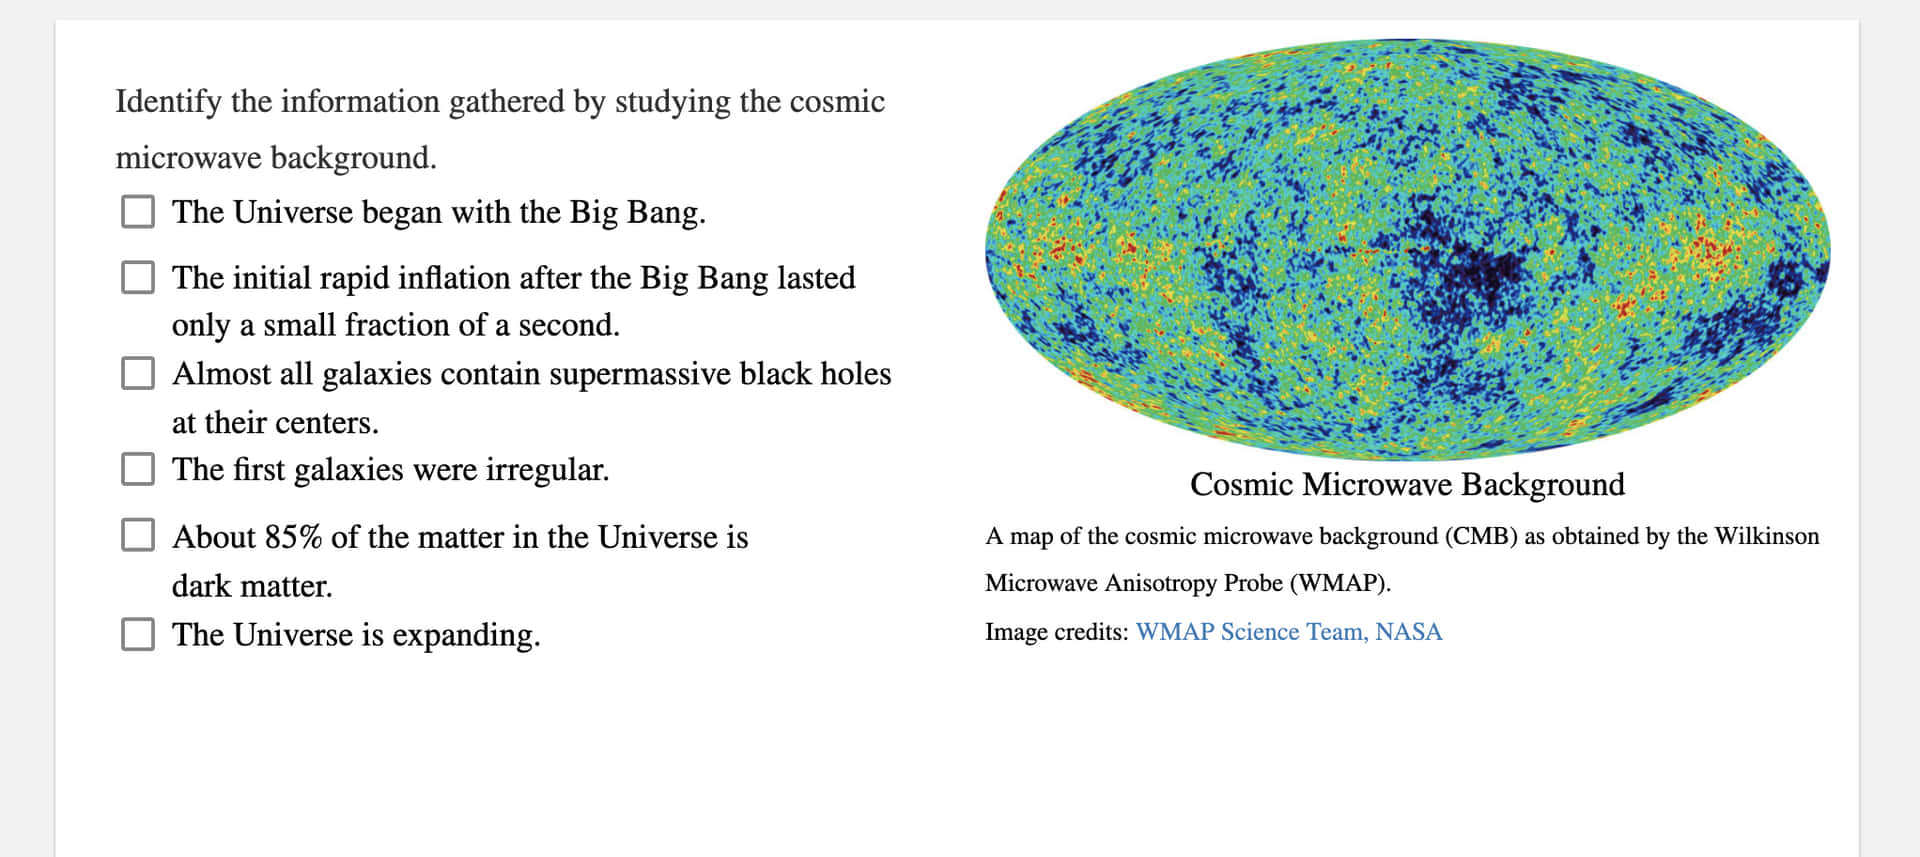 Imagendel Cmb (fondo De Radiación Cósmica De Microondas) Del Wmap